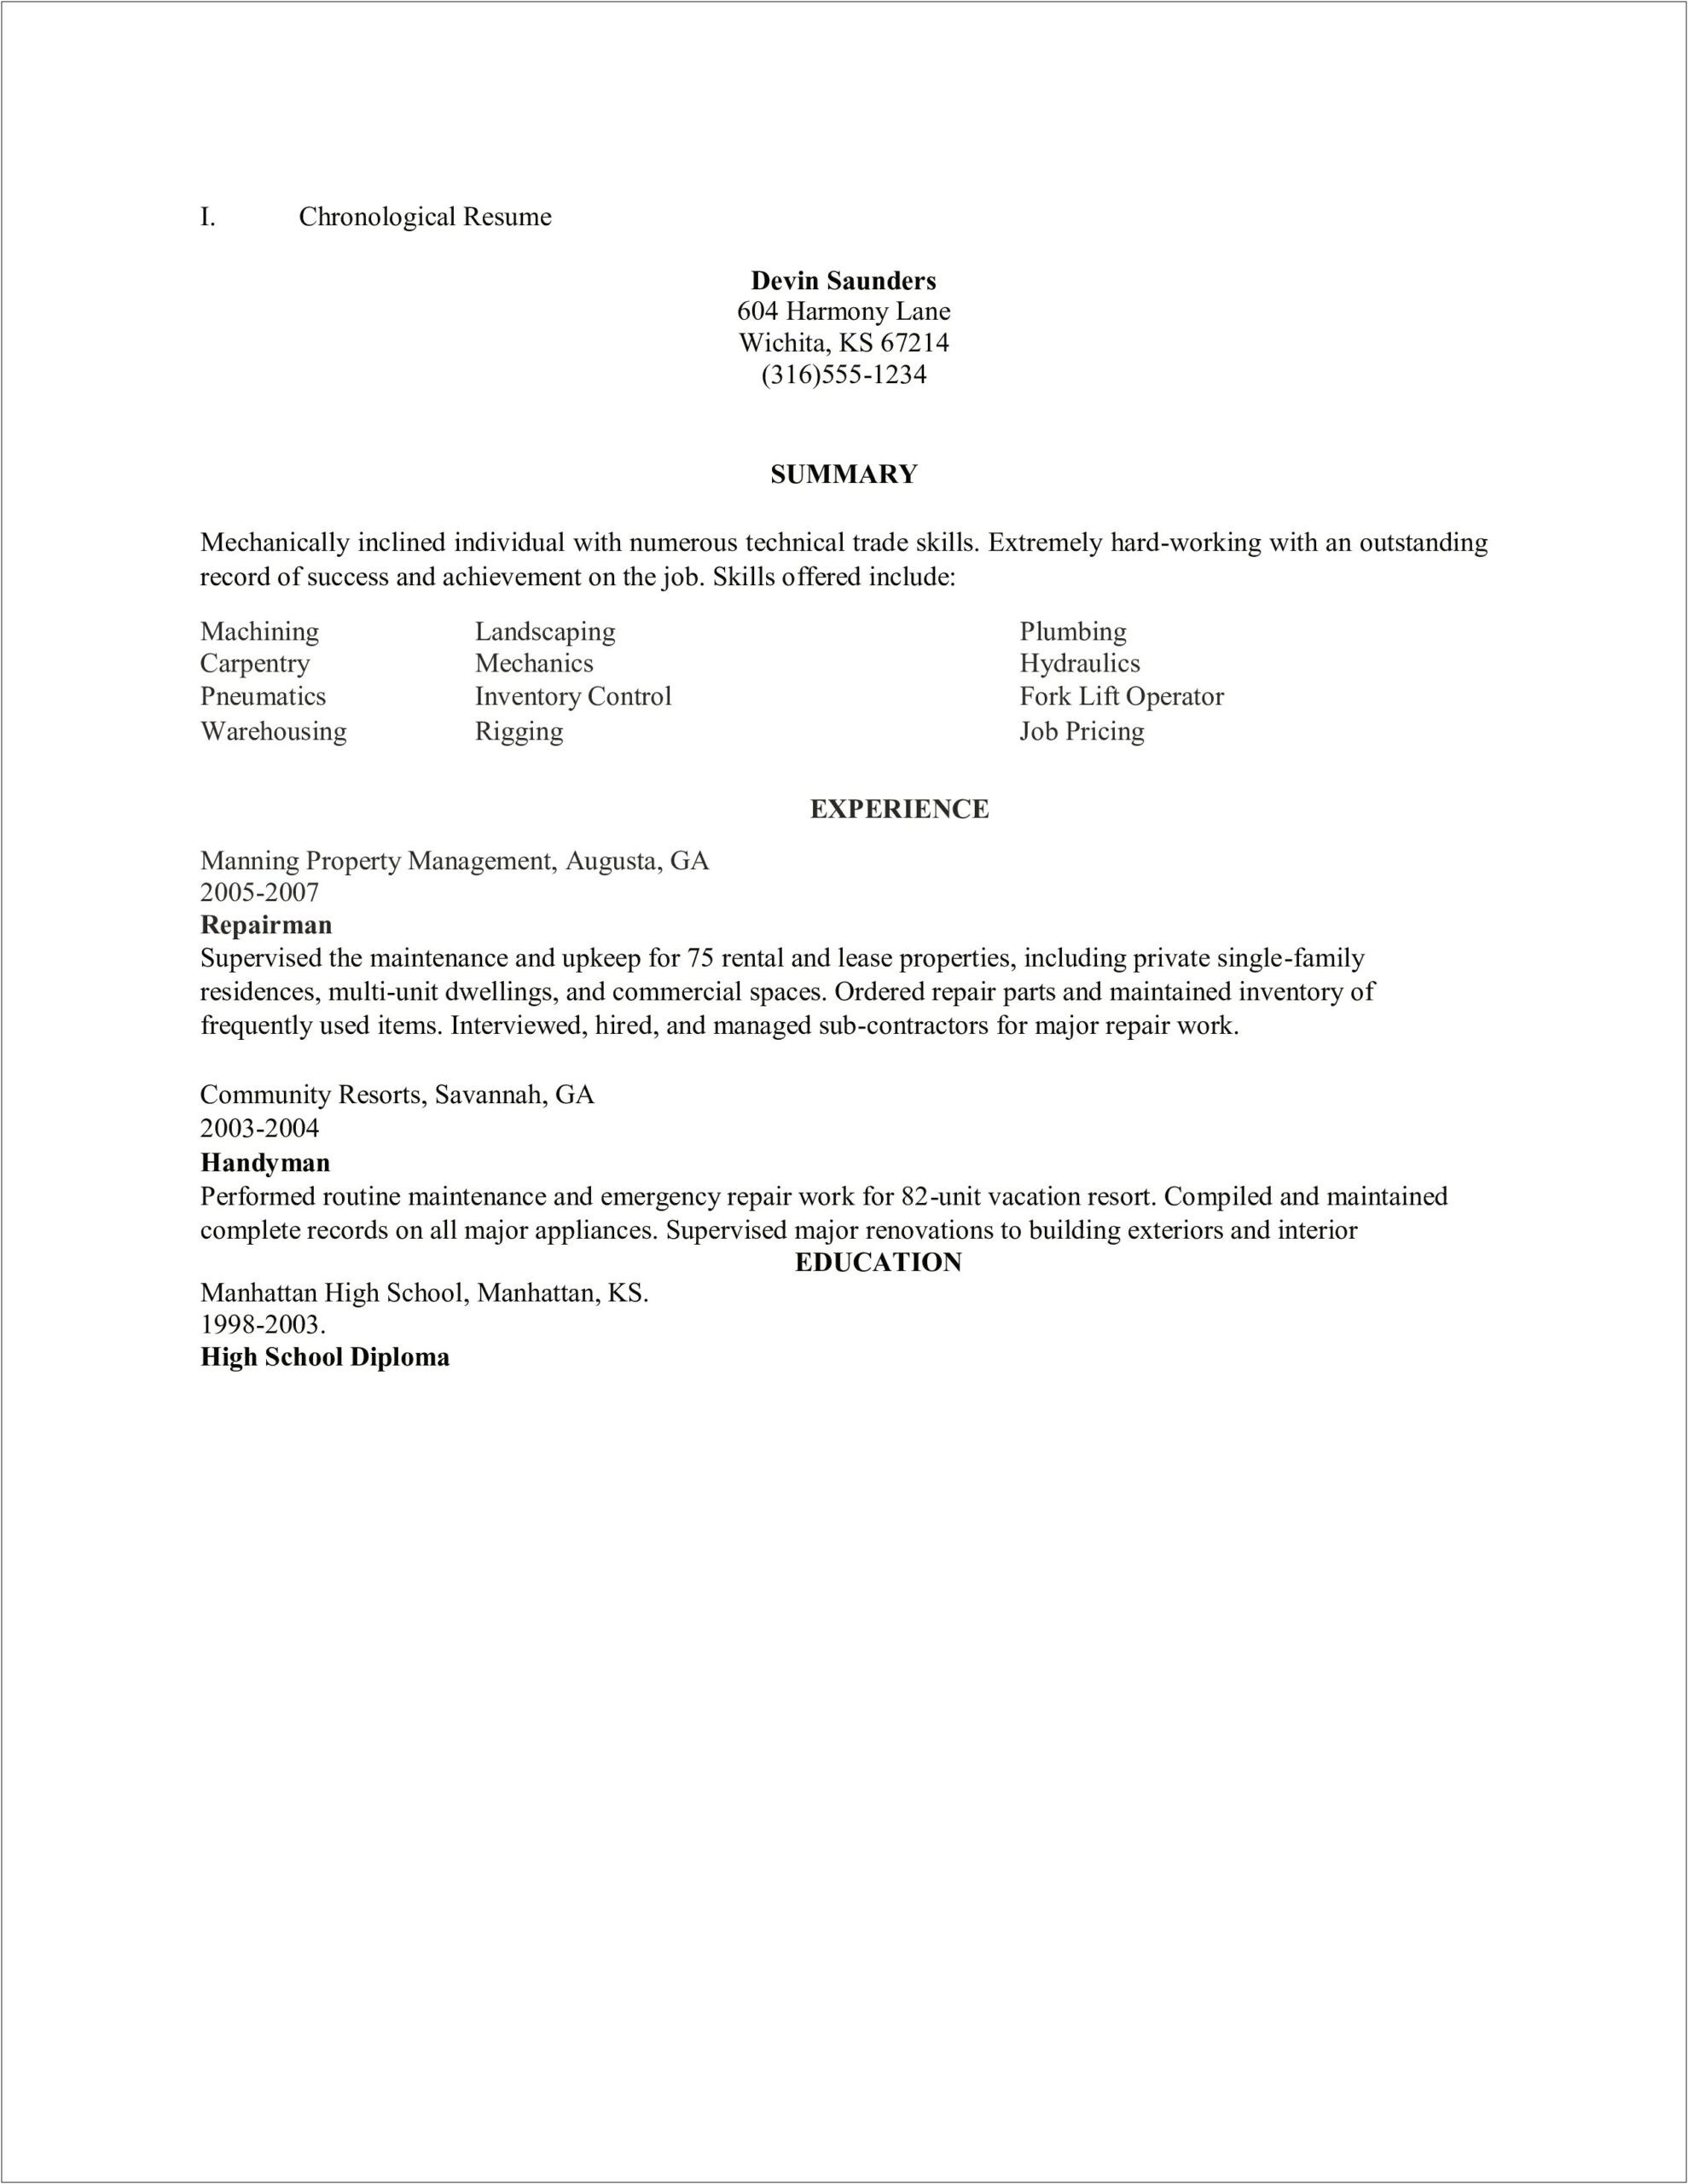 Elevator Operator Job Description For Resume